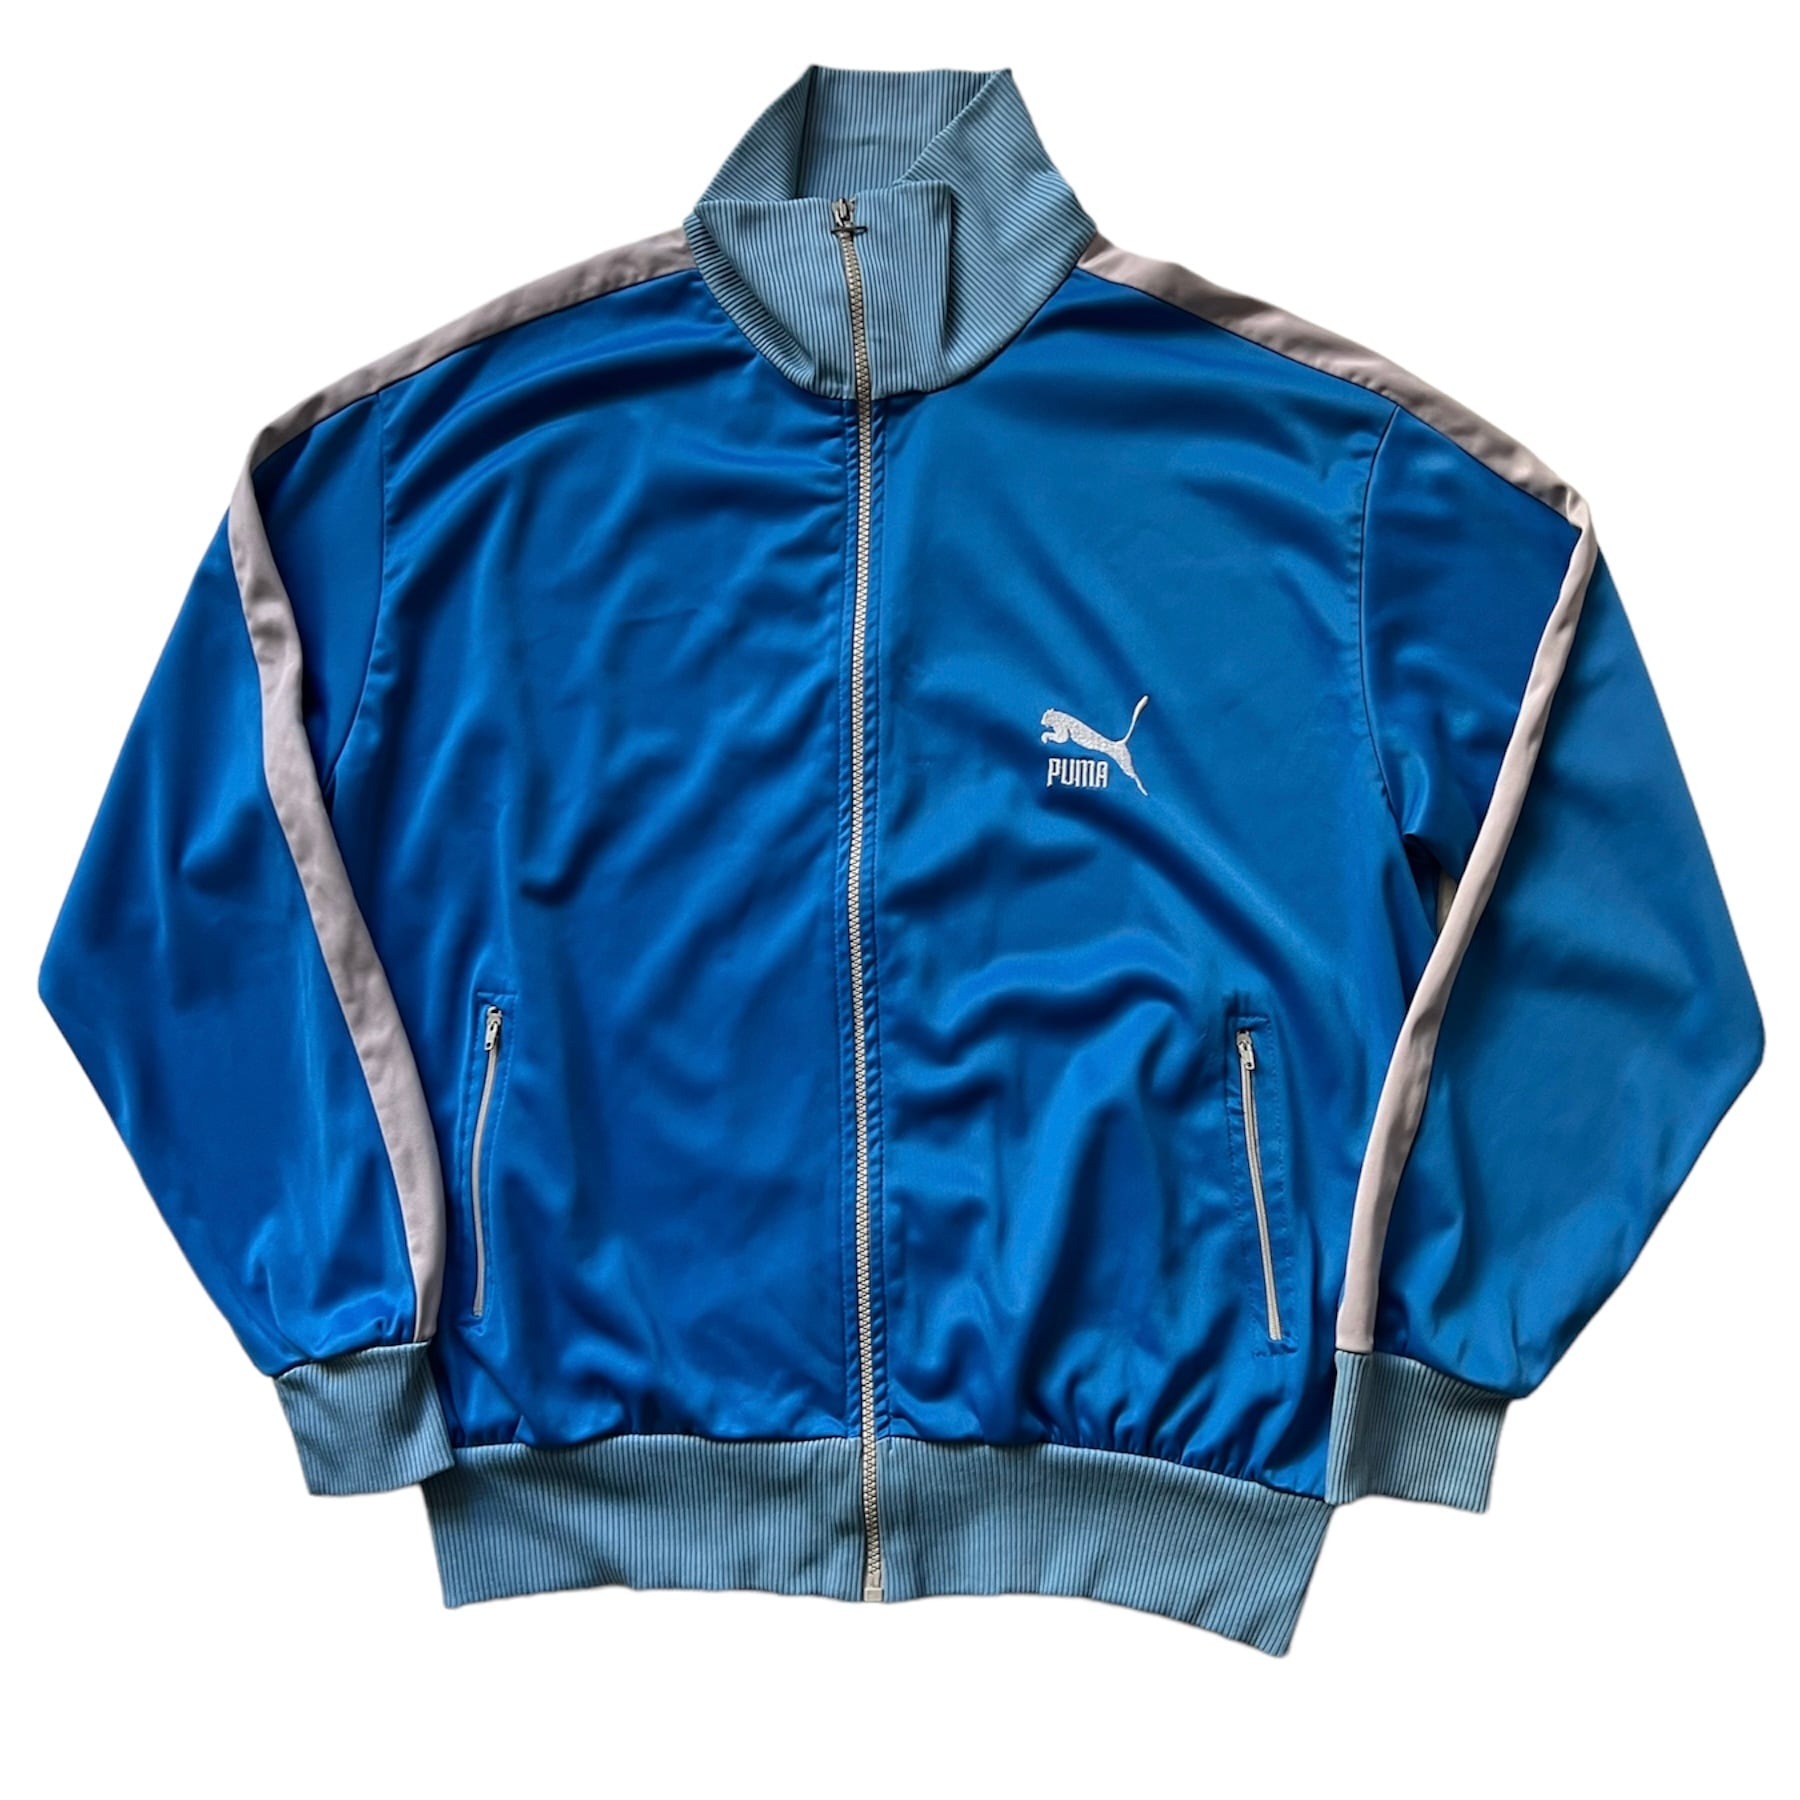 1980's PUMA Track jacket Made in Malaysia XL プーマ マレーシア製 ...